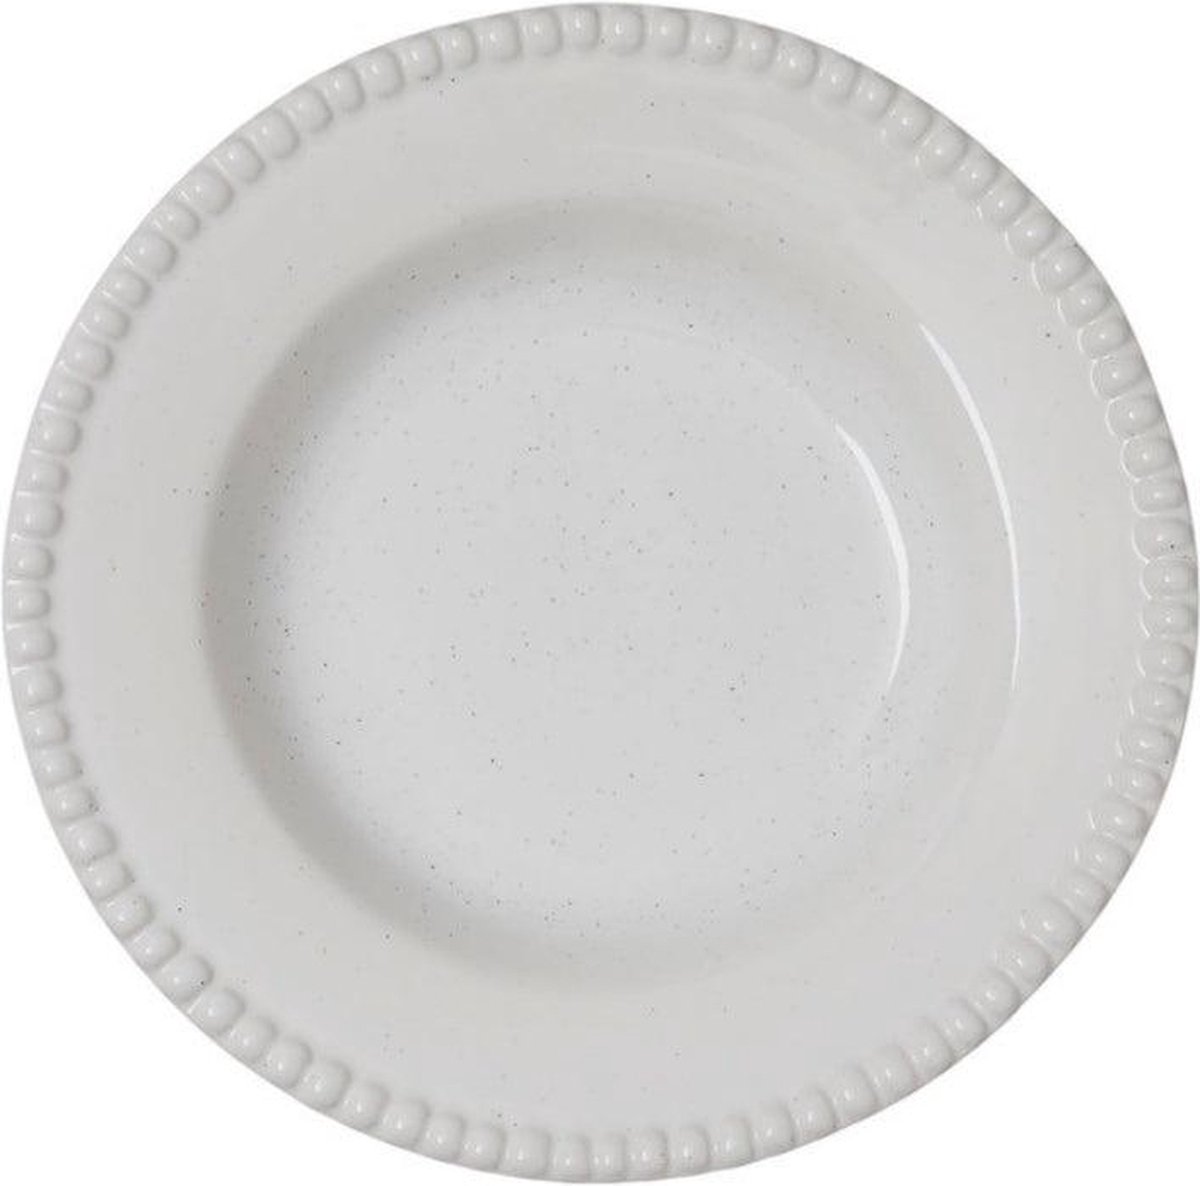 Pottery Jo - Daria soepbord 26cm Cotton White Shiny (set van 2) - Diepe borden